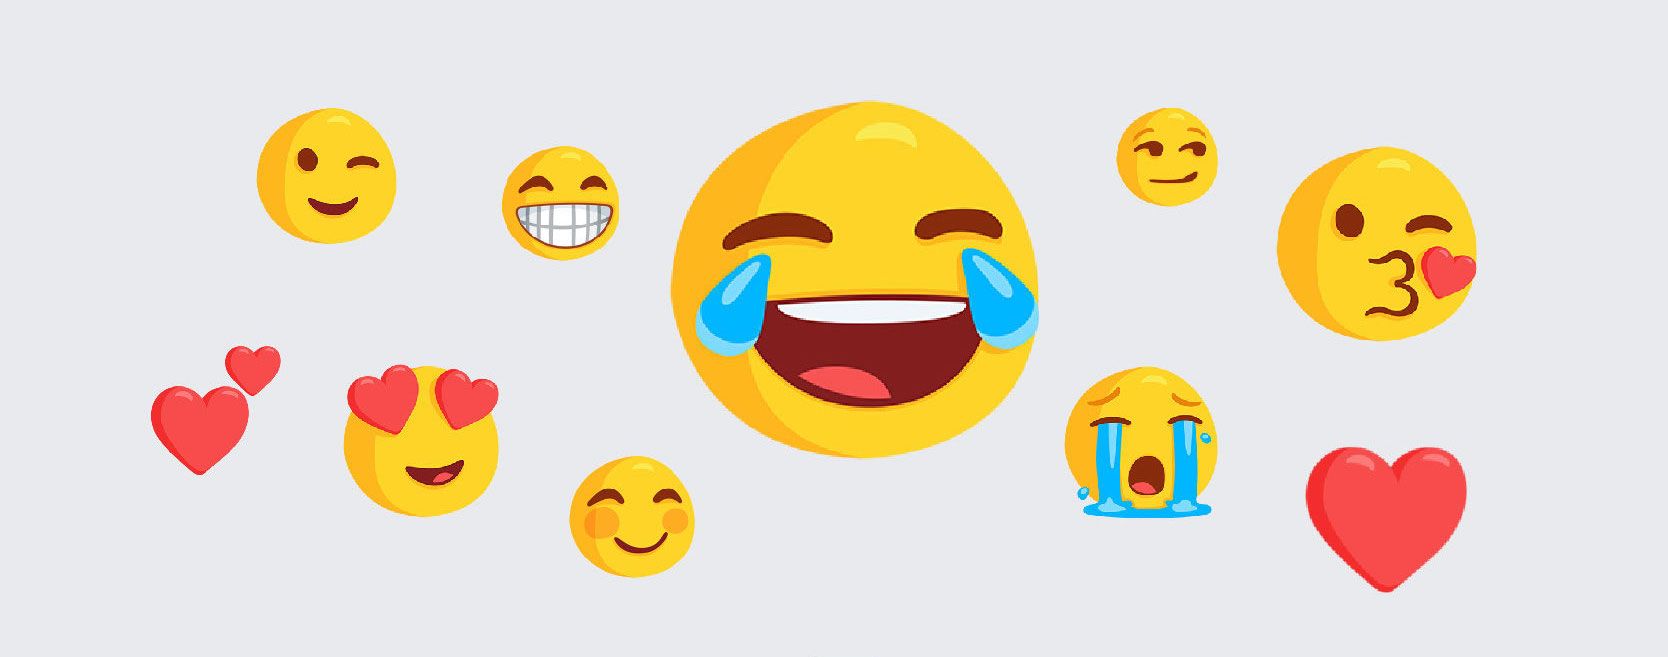 5 Billion Emojis Sent Daily on Messenger